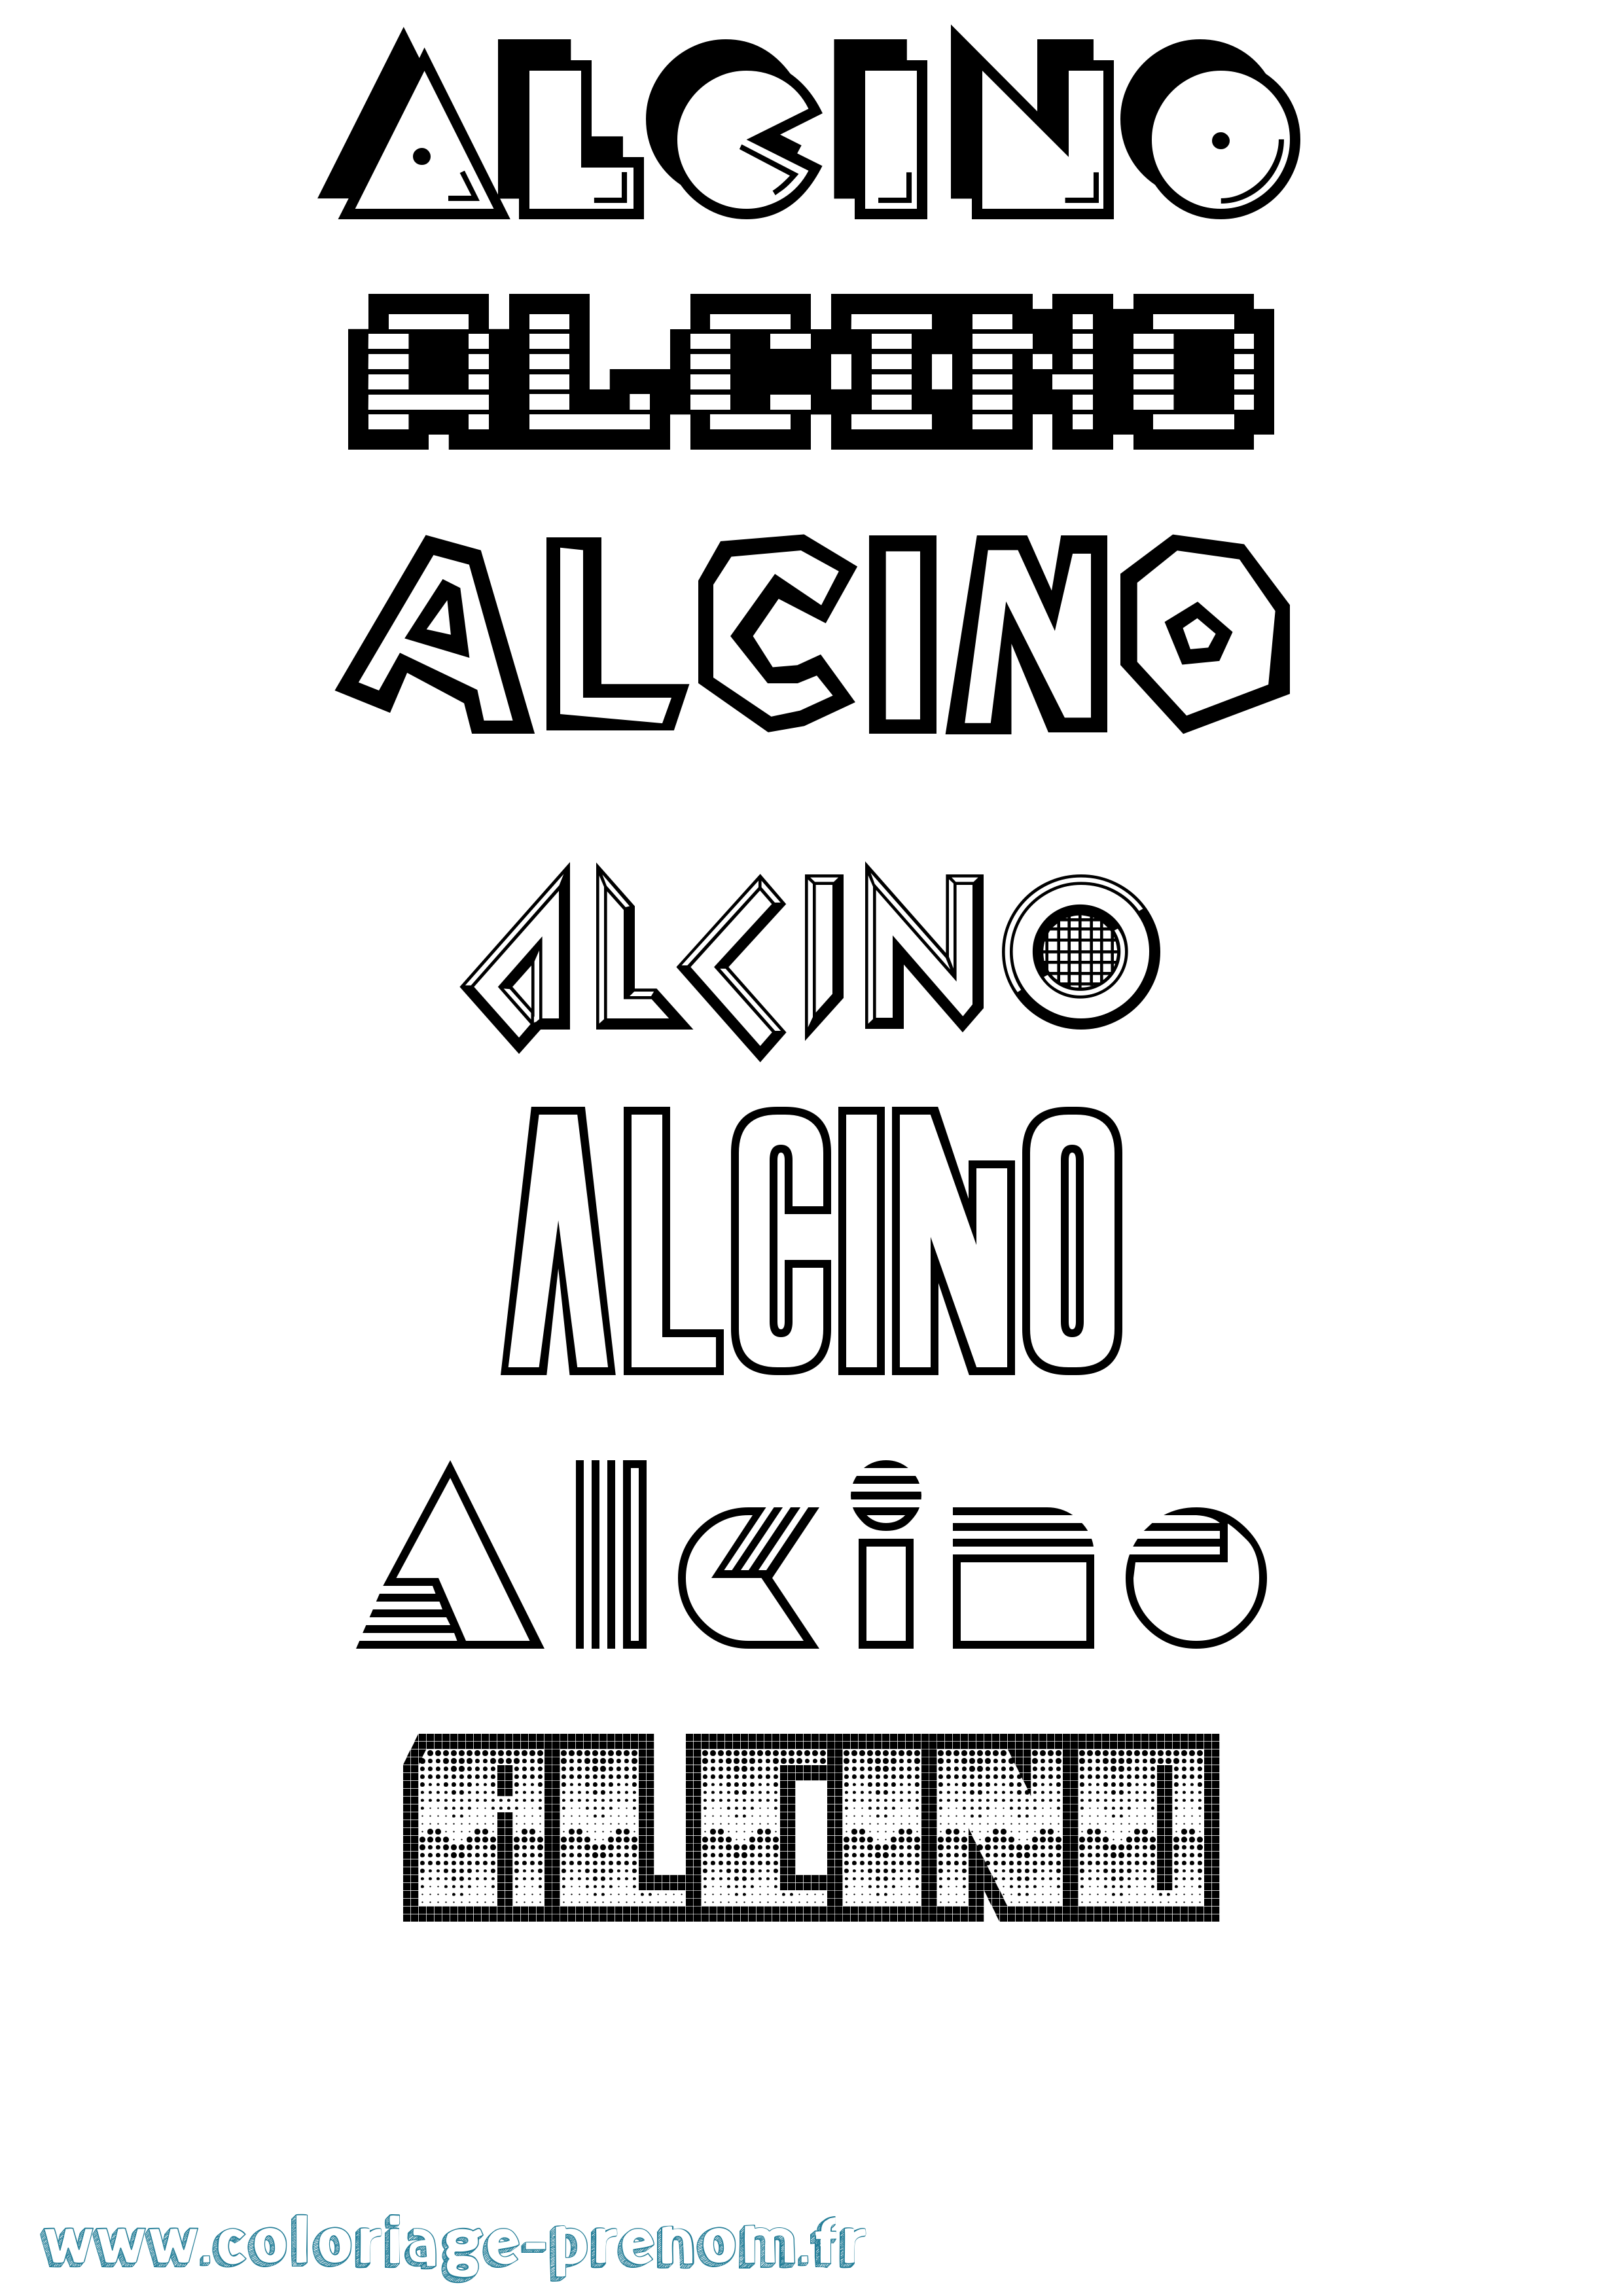 Coloriage prénom Alcino Jeux Vidéos